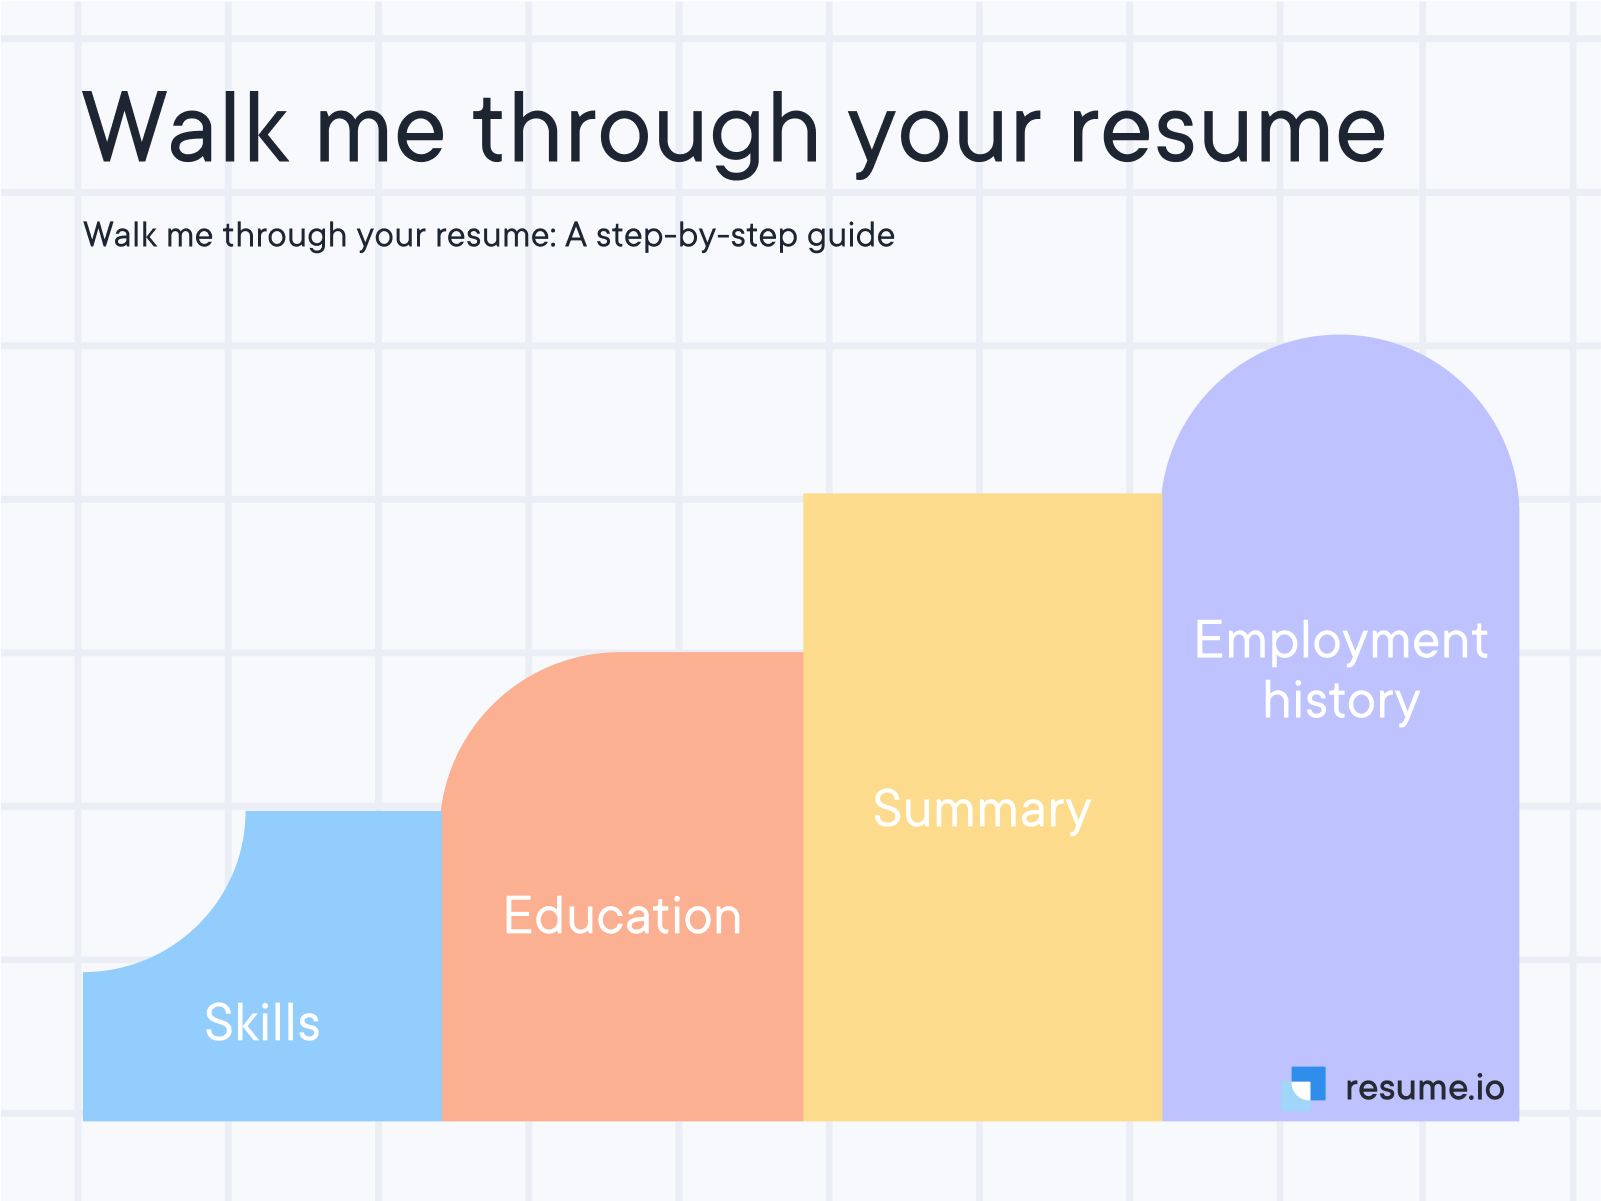 Walk me through your resume